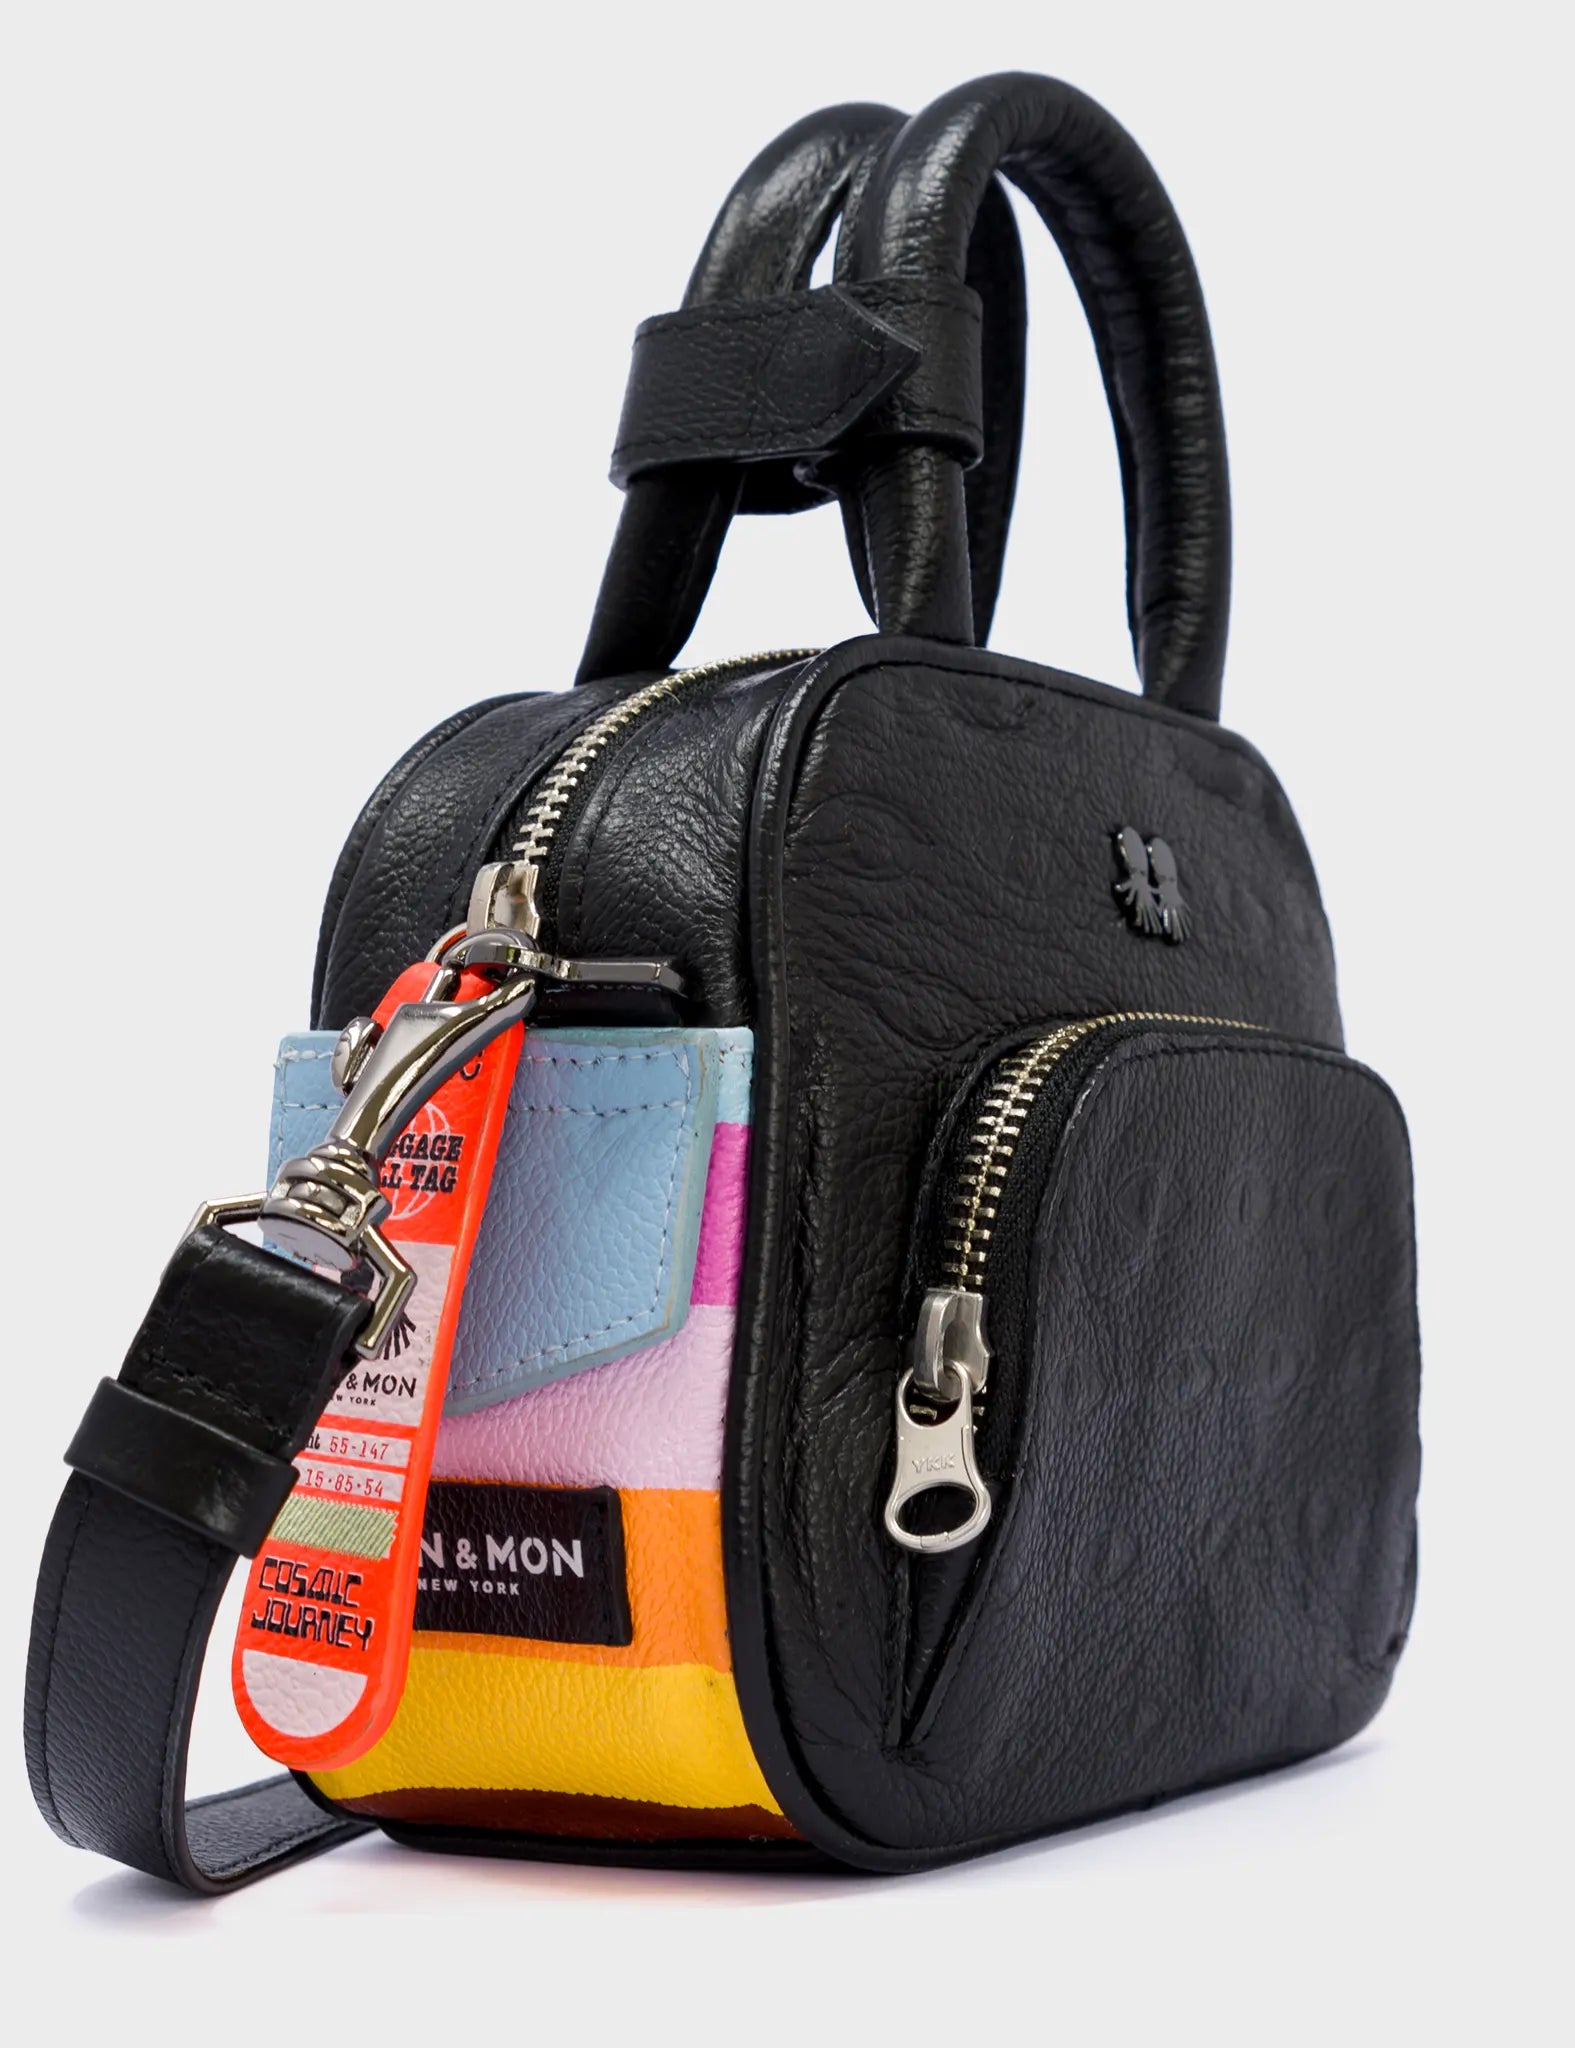 Neon Orange Shoulder Bag Quilted Handbag Small Bag Bright Tangerine Gold  Chain Detail